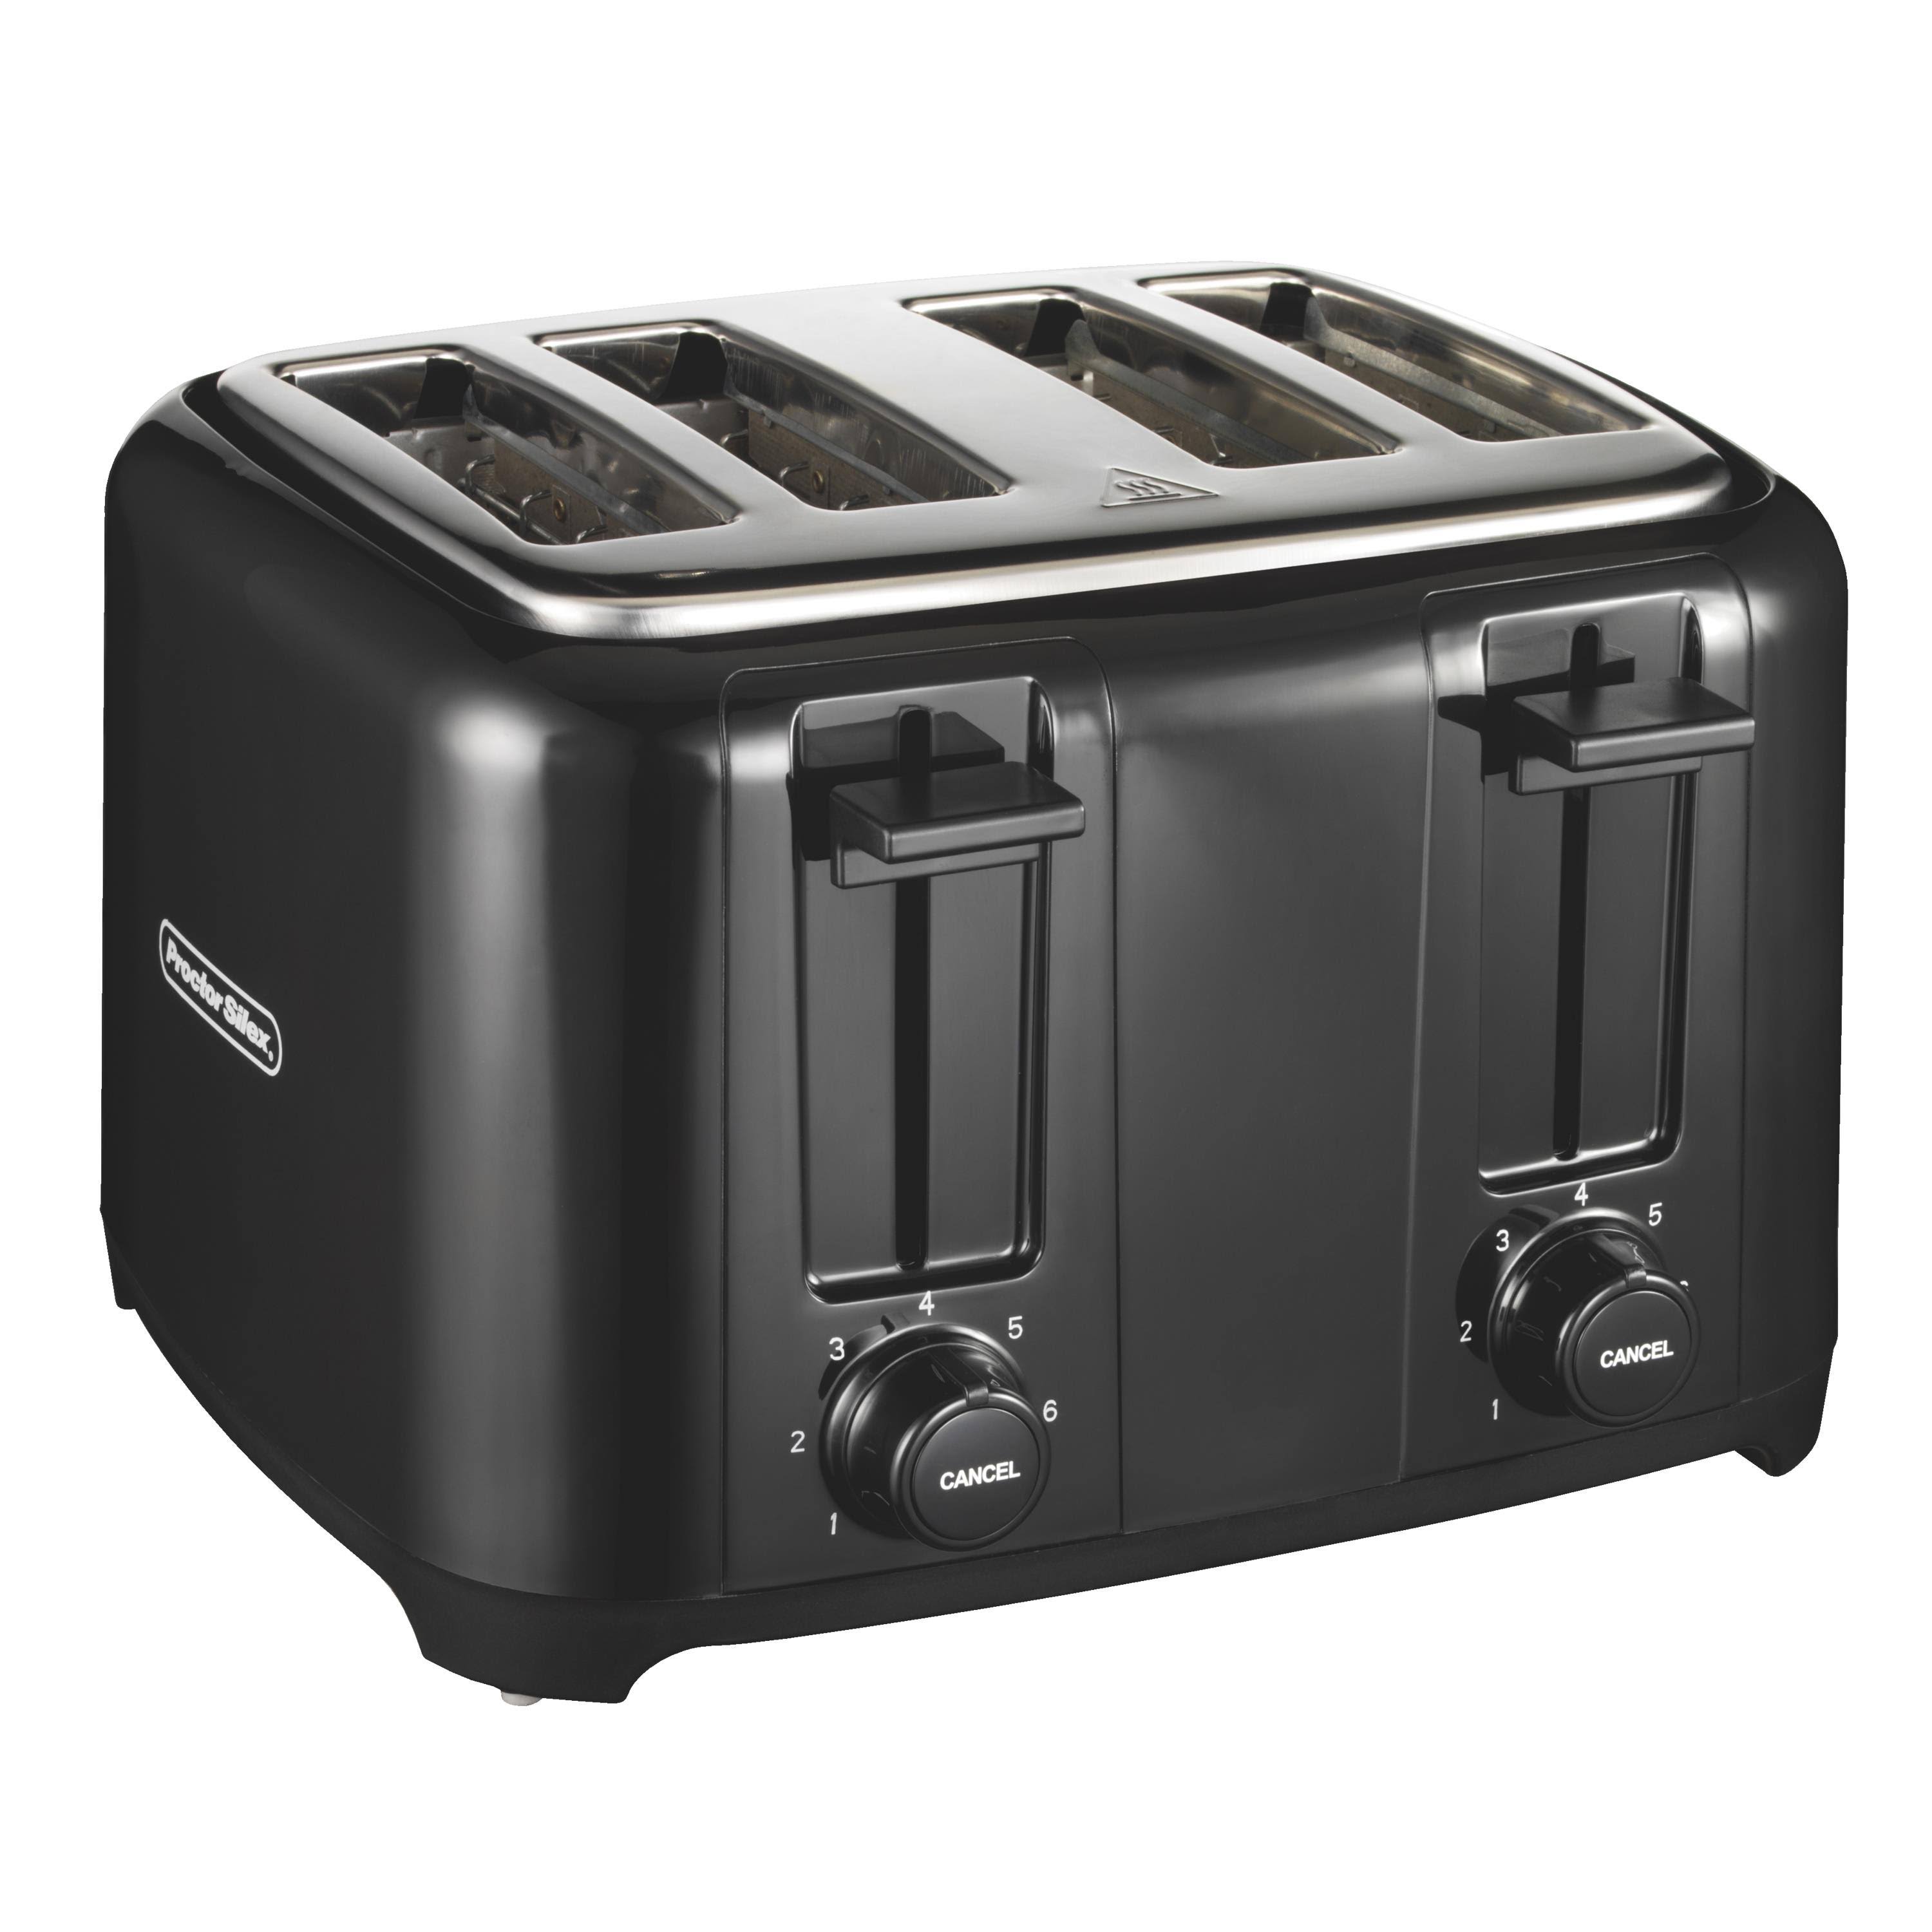 Proctor Silex 4-Slice Durable Toaster - Black